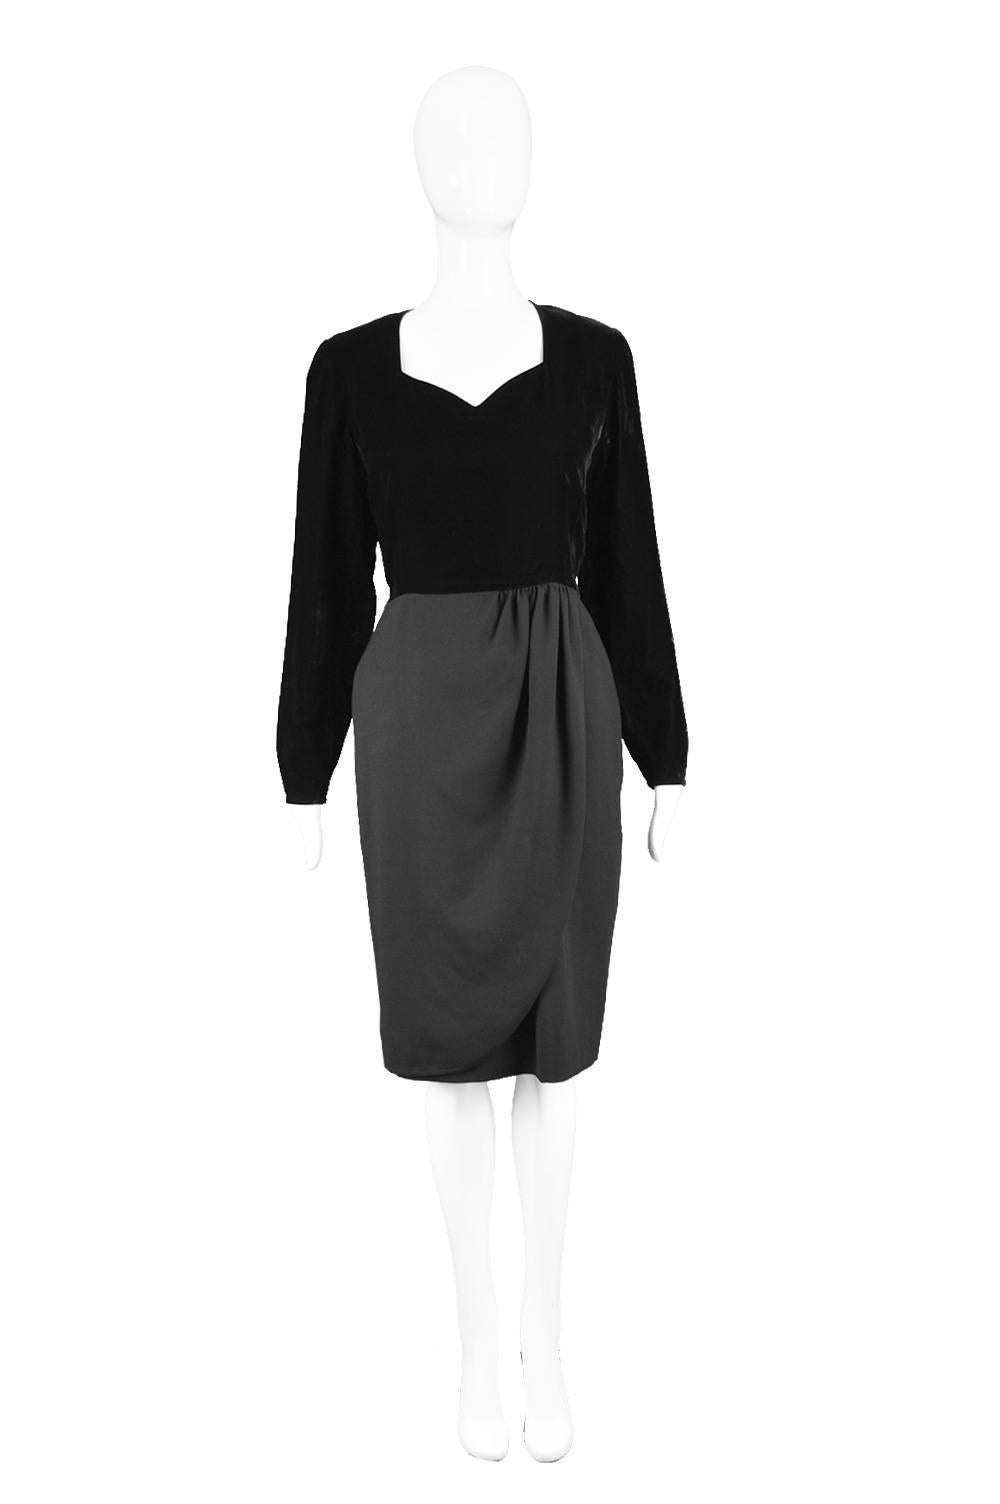 Valentino Vintage 1980's Black Velvet & Wool Long Sleeve Evening Party Dress

Estimated Size: UK 8-10/ US 4-6/ EU 36-38. Please check measurements.   
Bust - 34” / 86cm
Waist - 27” / 68cm
Hips - 38” / 96cm
Length (Shoulder to Hem) - 40” /